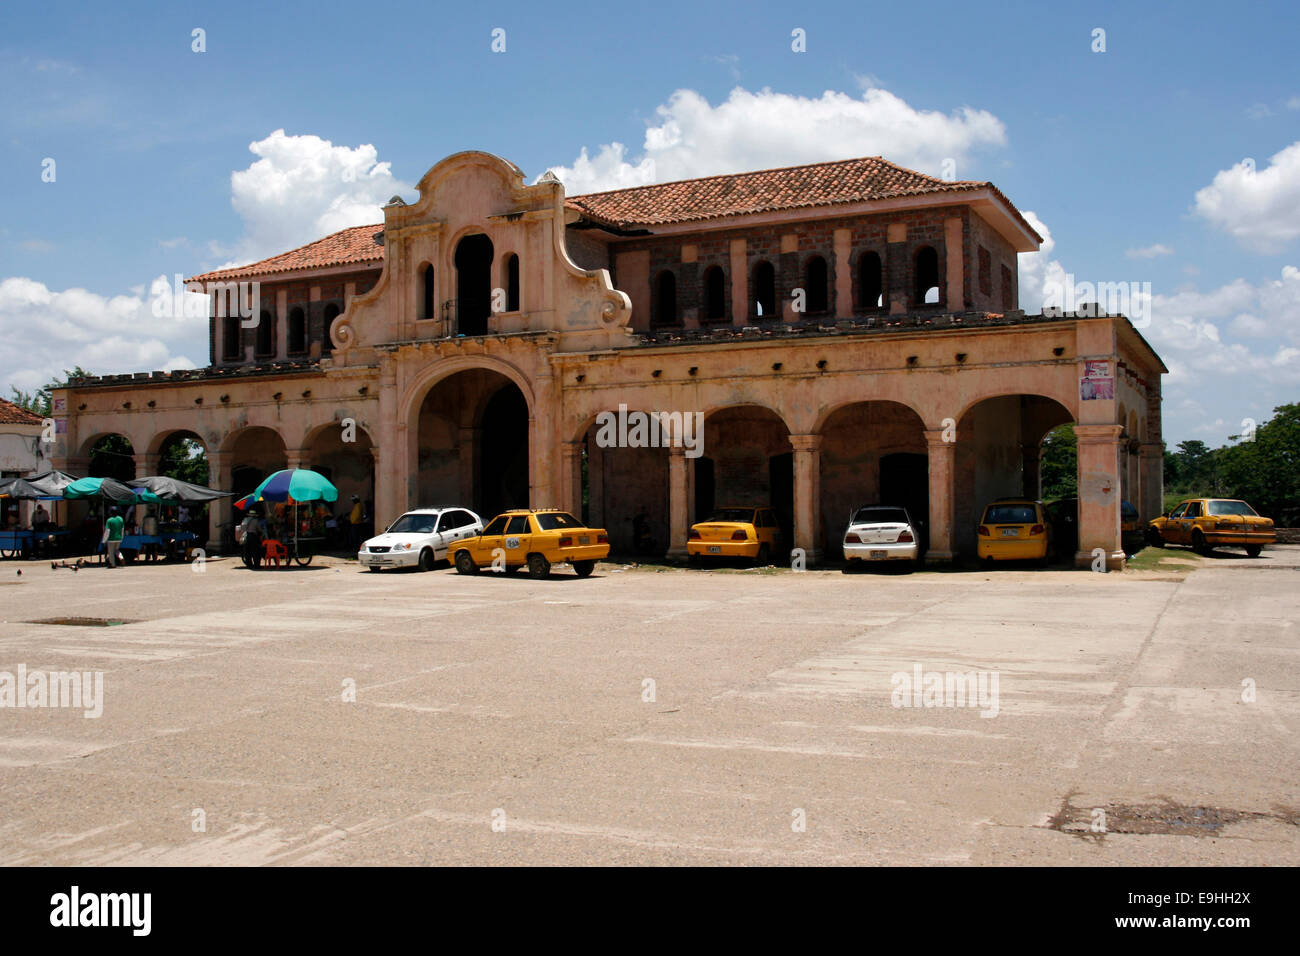 Taxis wait in the Plaza de la Concepcion in Santa Cruz de Mompox, Colombia Stock Photo